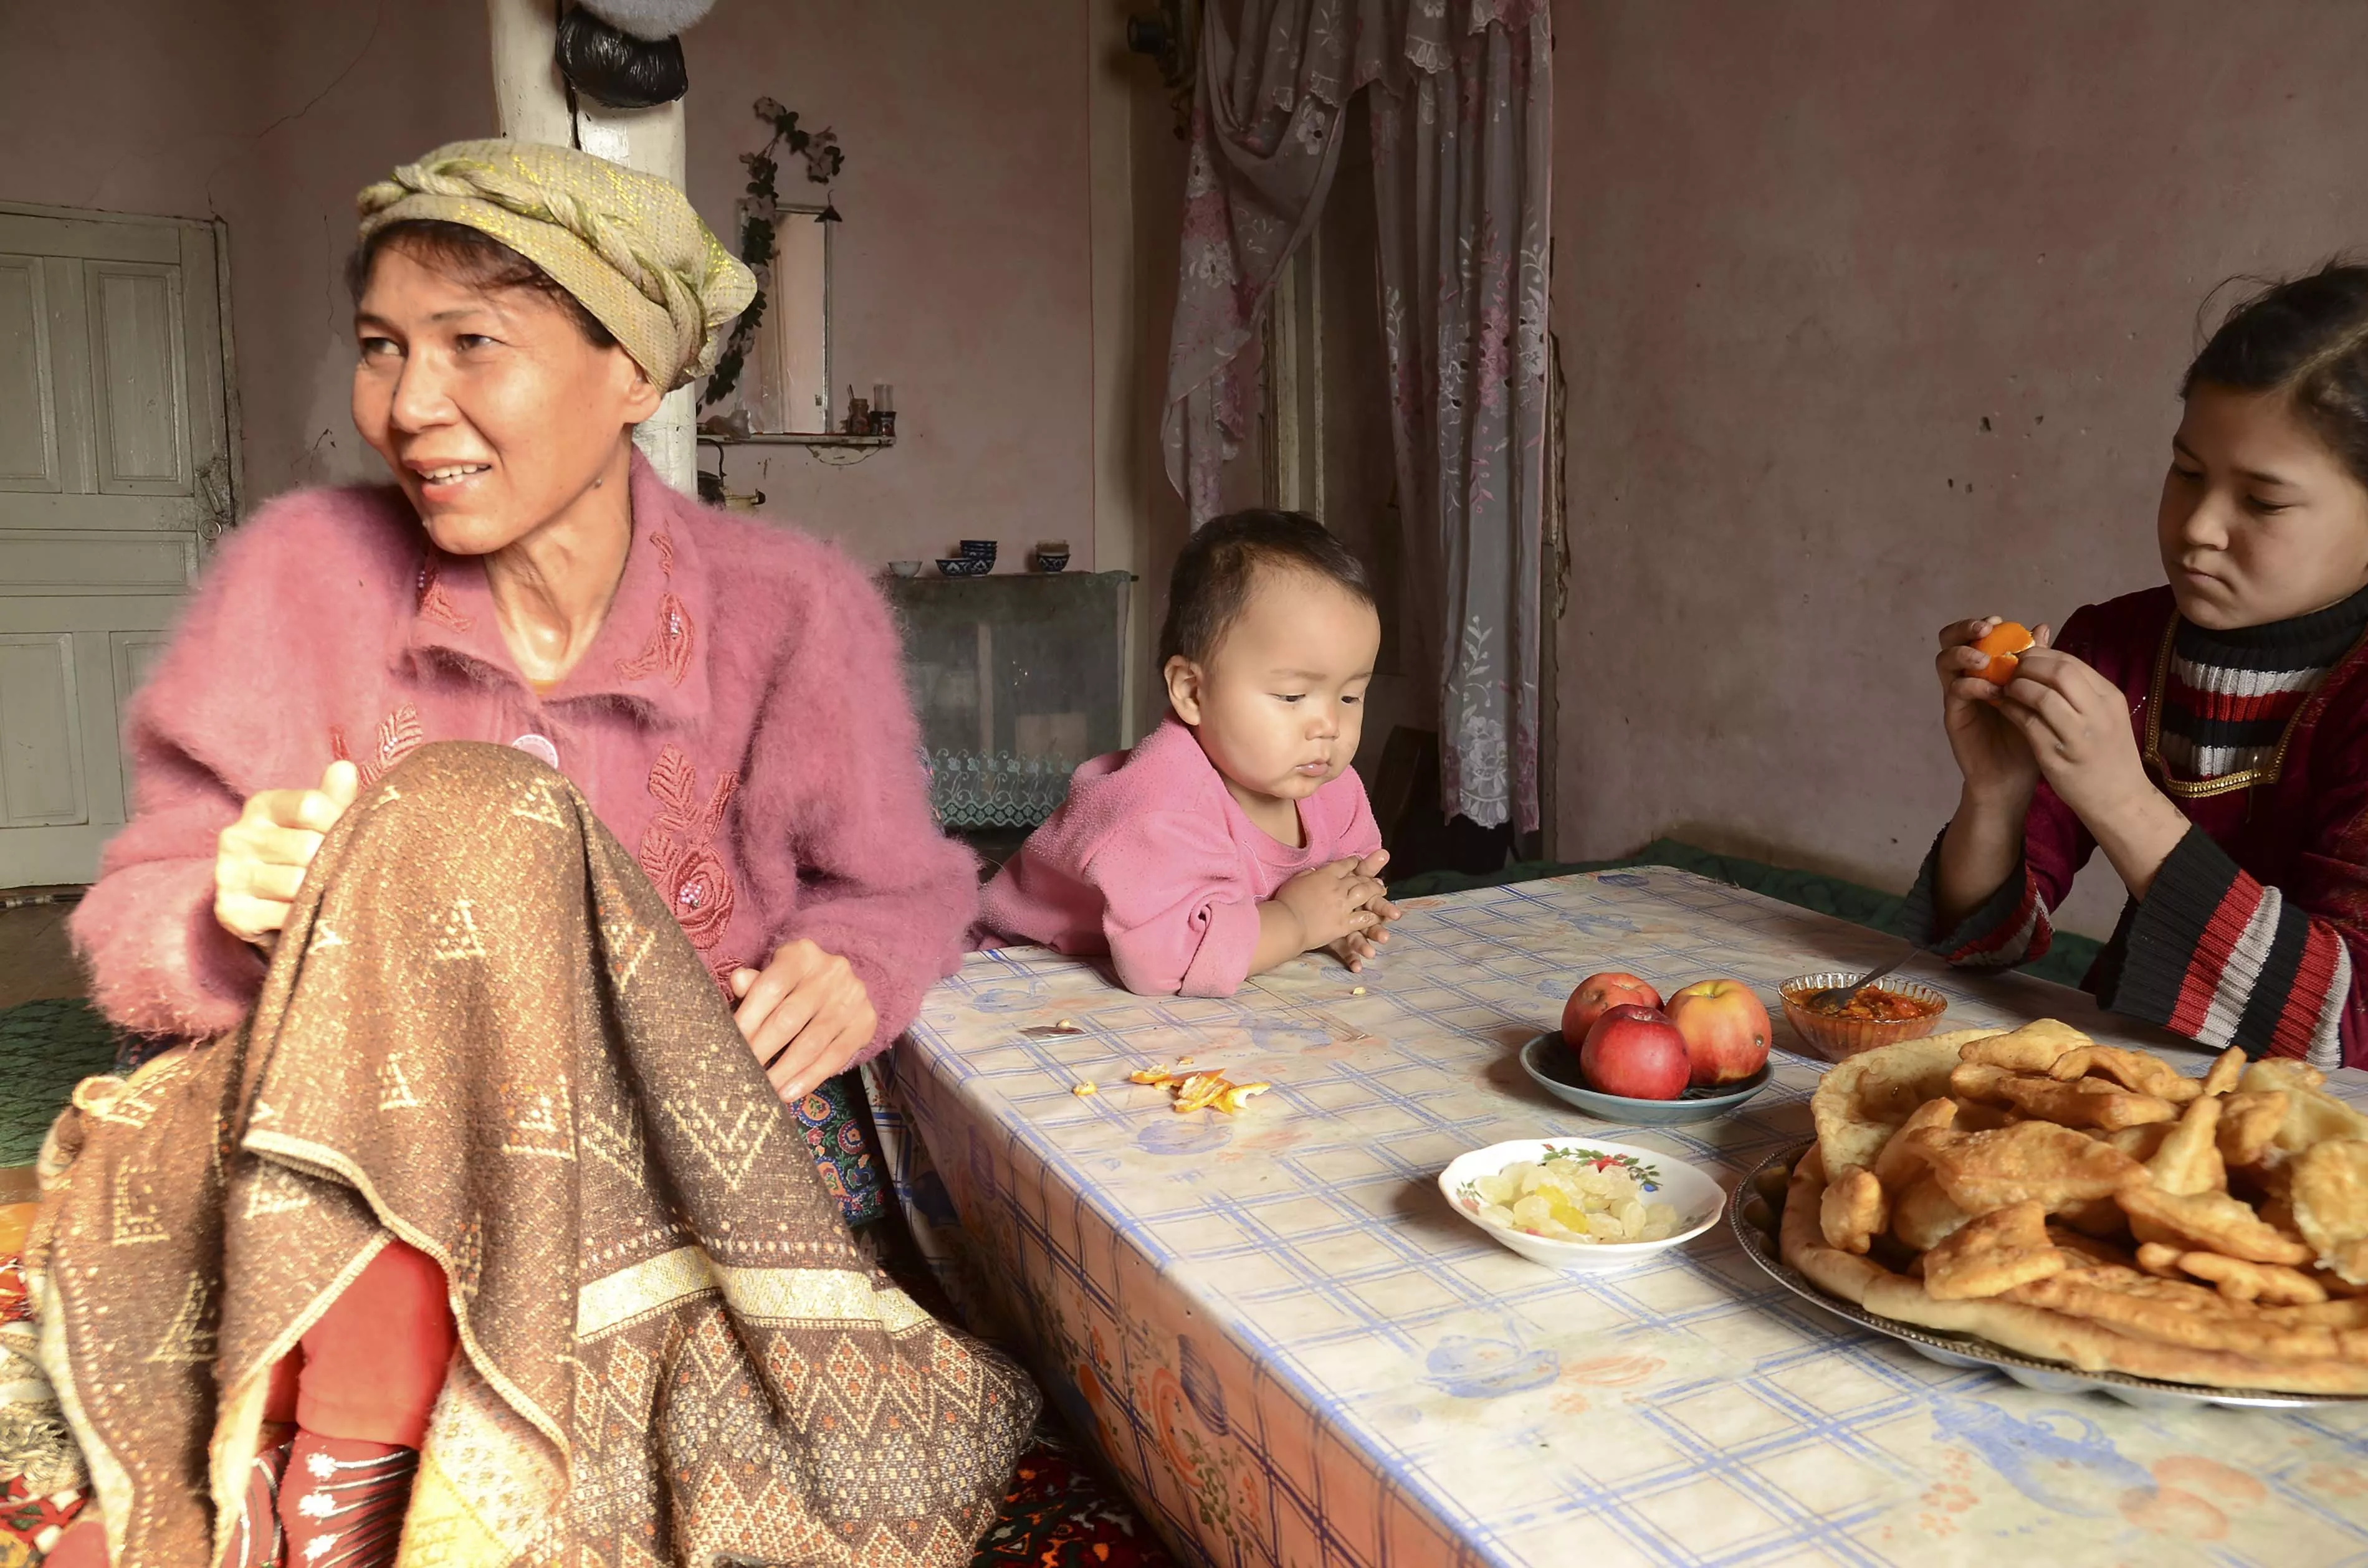 MDR-TB patient Rohatay Abdullaeva at her home with a grandson Atabek and daughter Nadira, town of Hojeily, Karakalpakstan (Uzbekistan). Photograph by Natalia Sergeeva